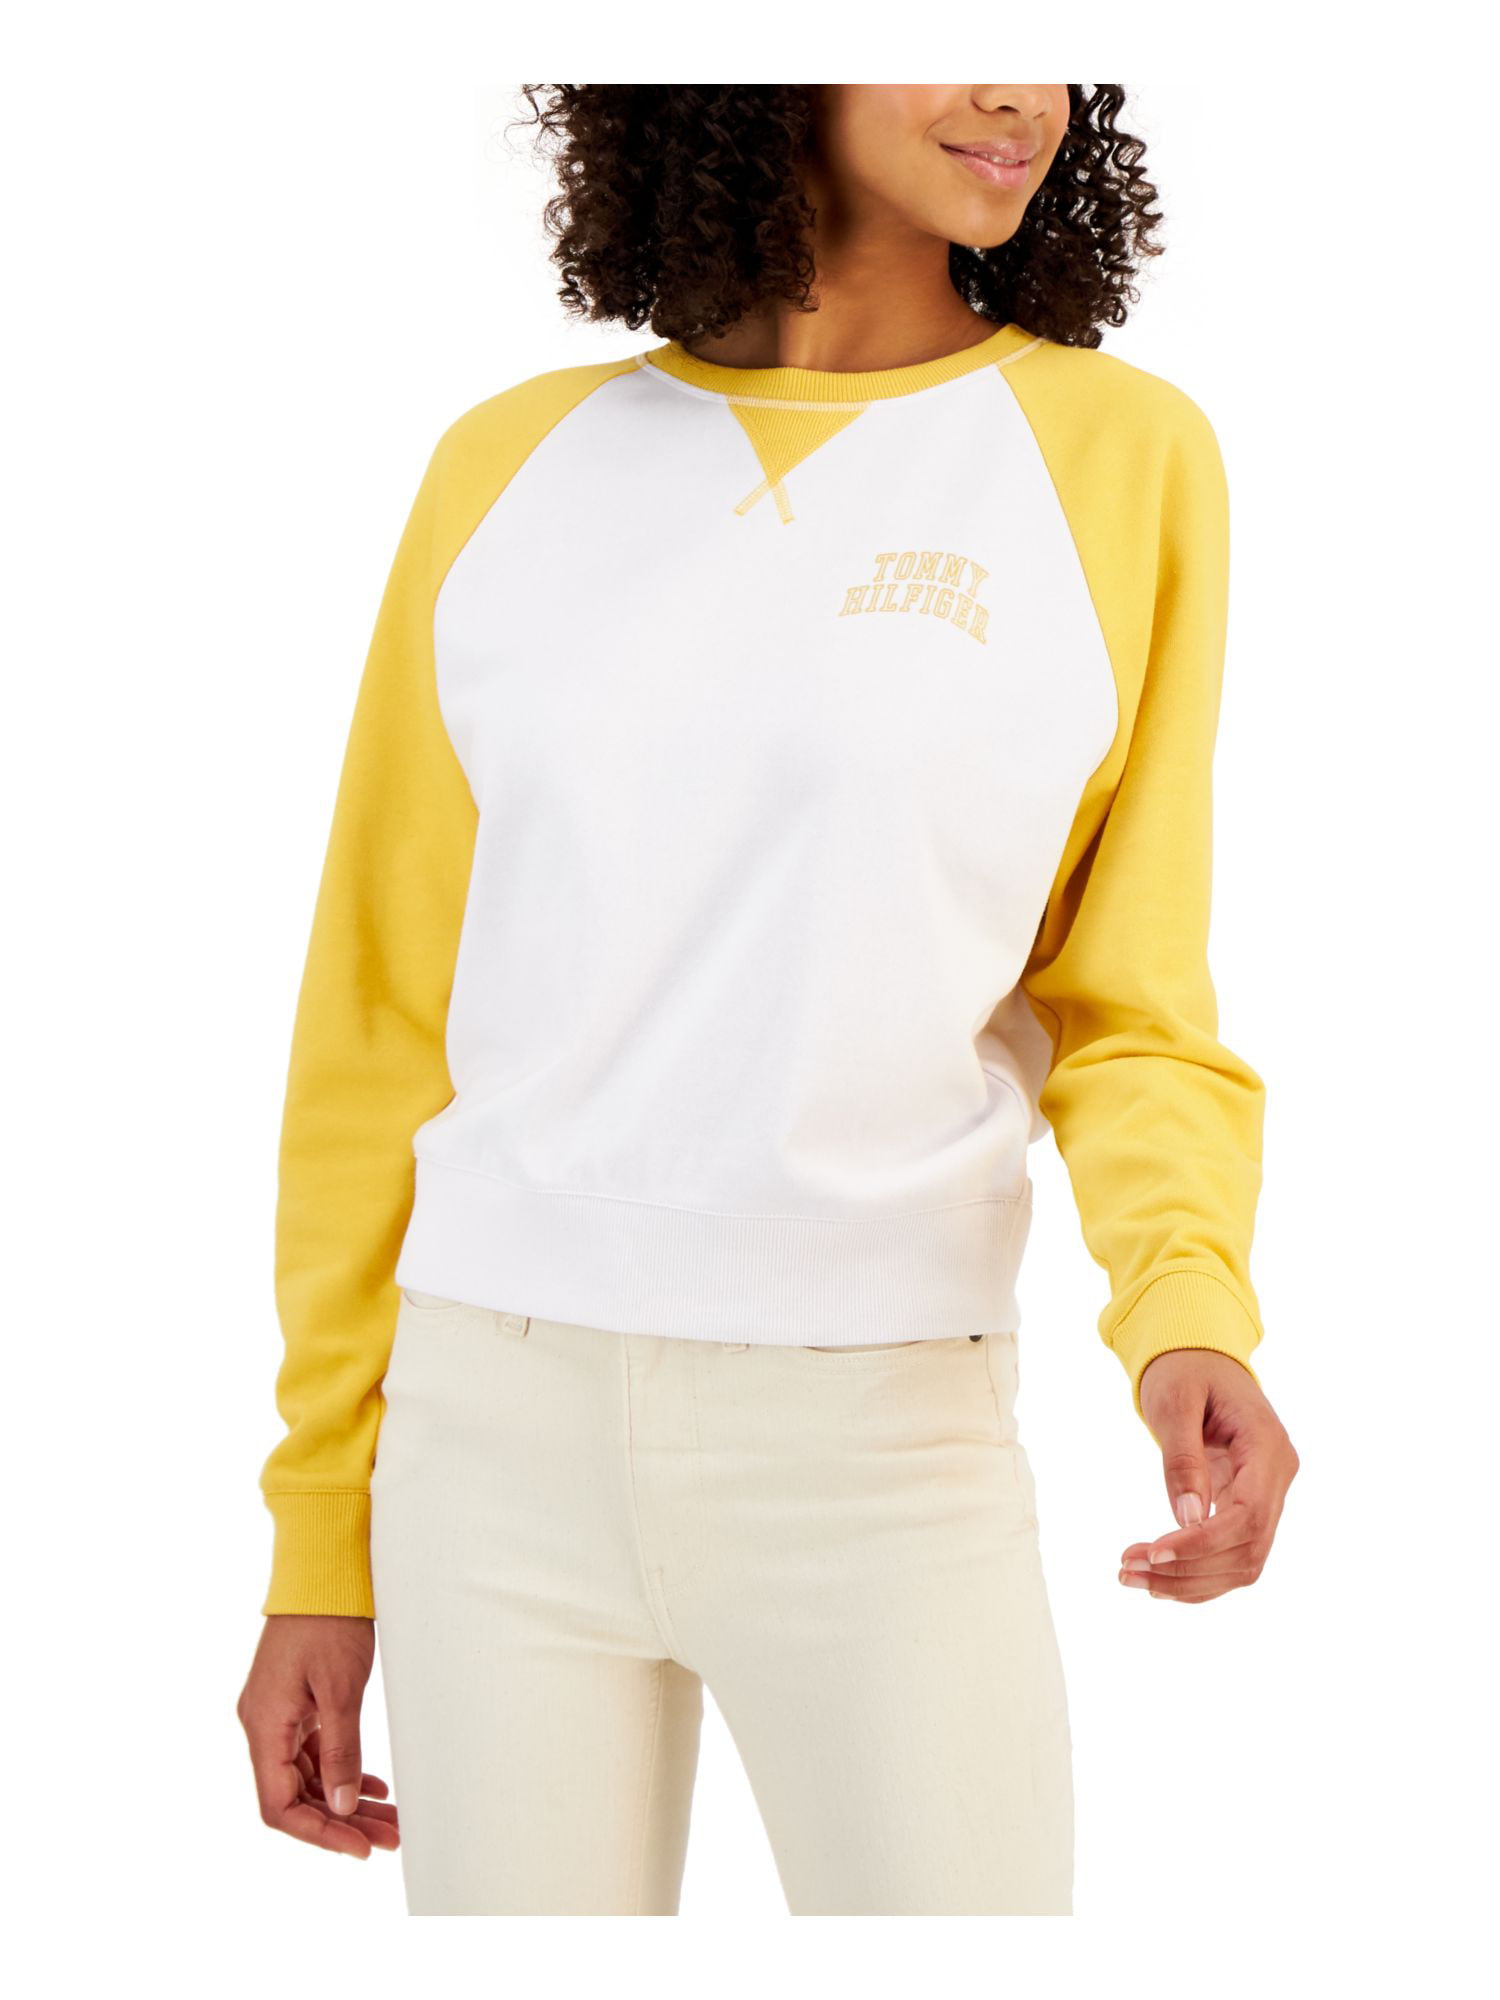 TOMMY HILFIGER Womens Yellow Color Block Sweatshirt S\P - Walmart.com